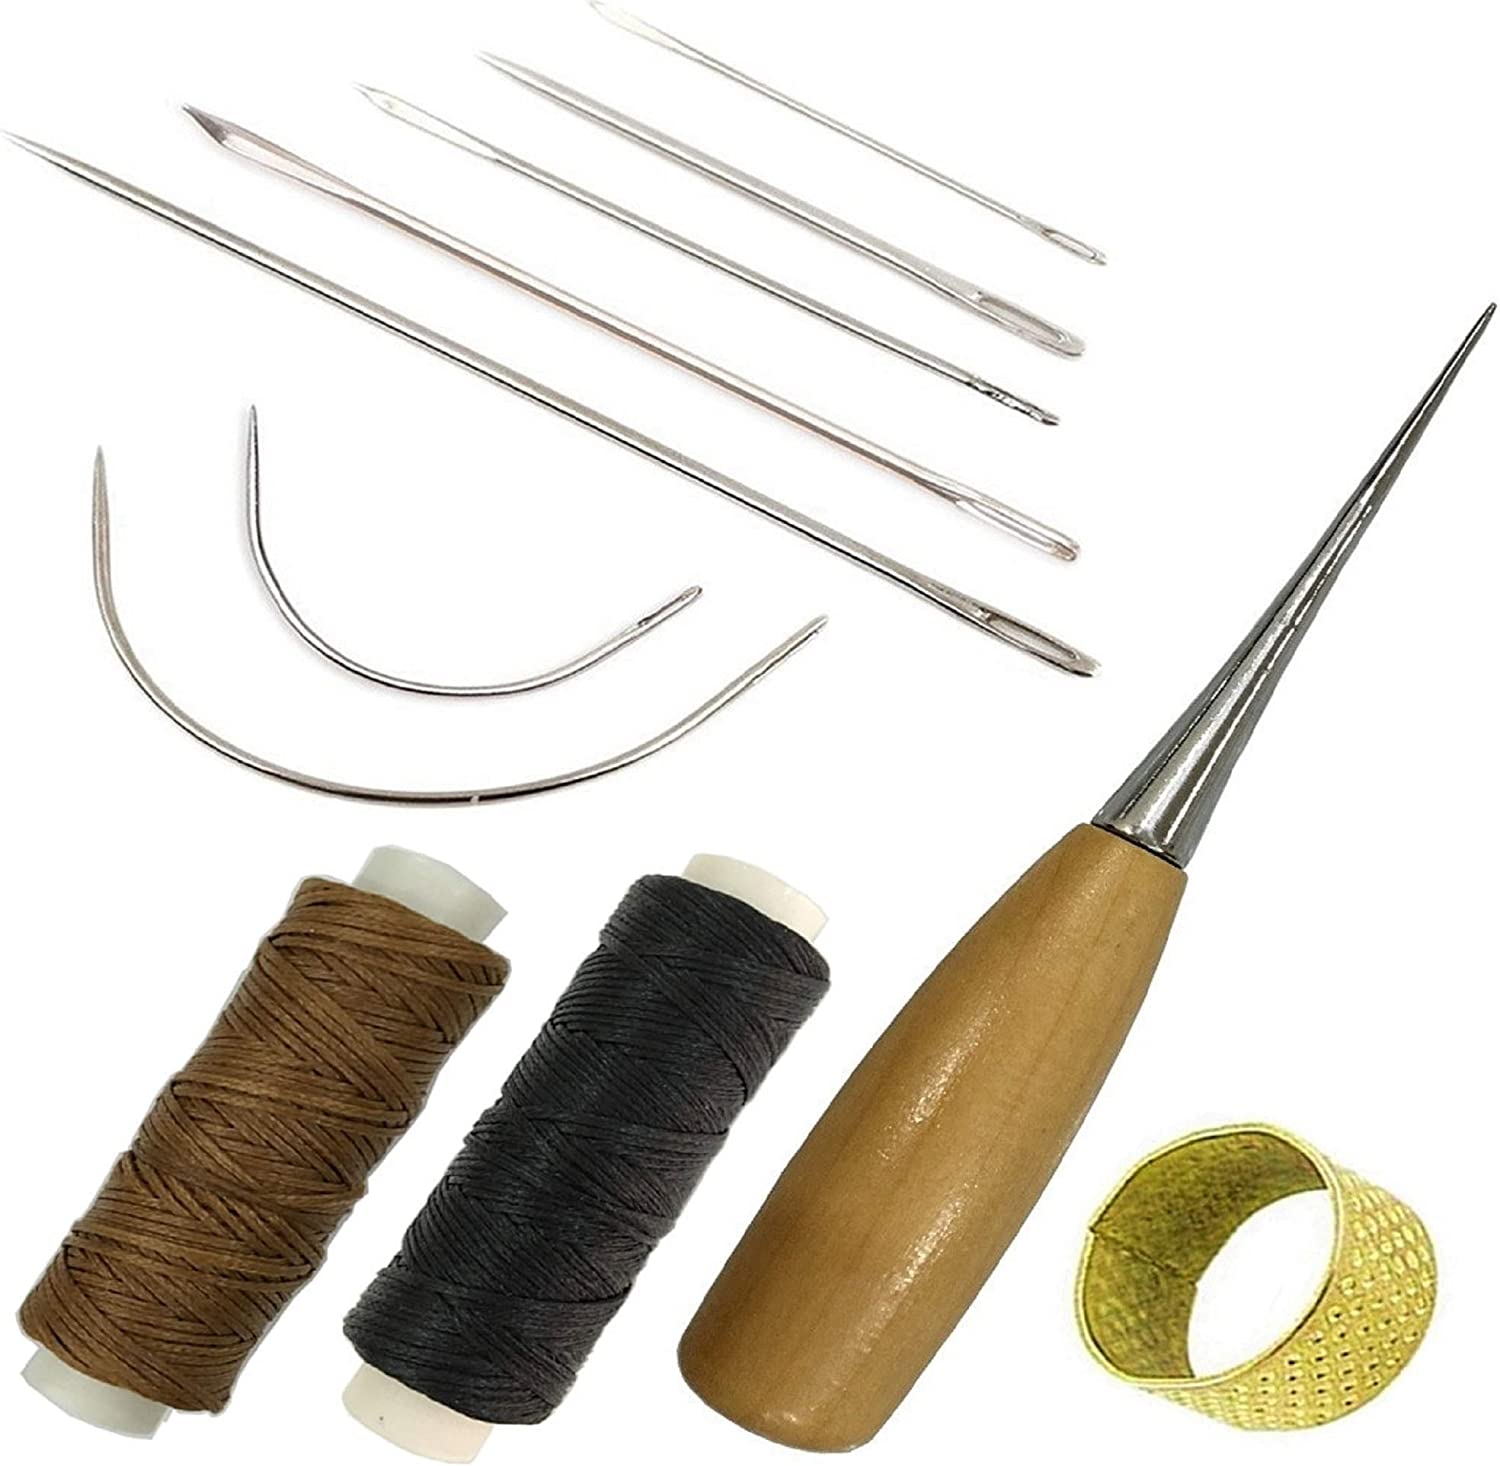 Leather Thimble - A Threaded Needle